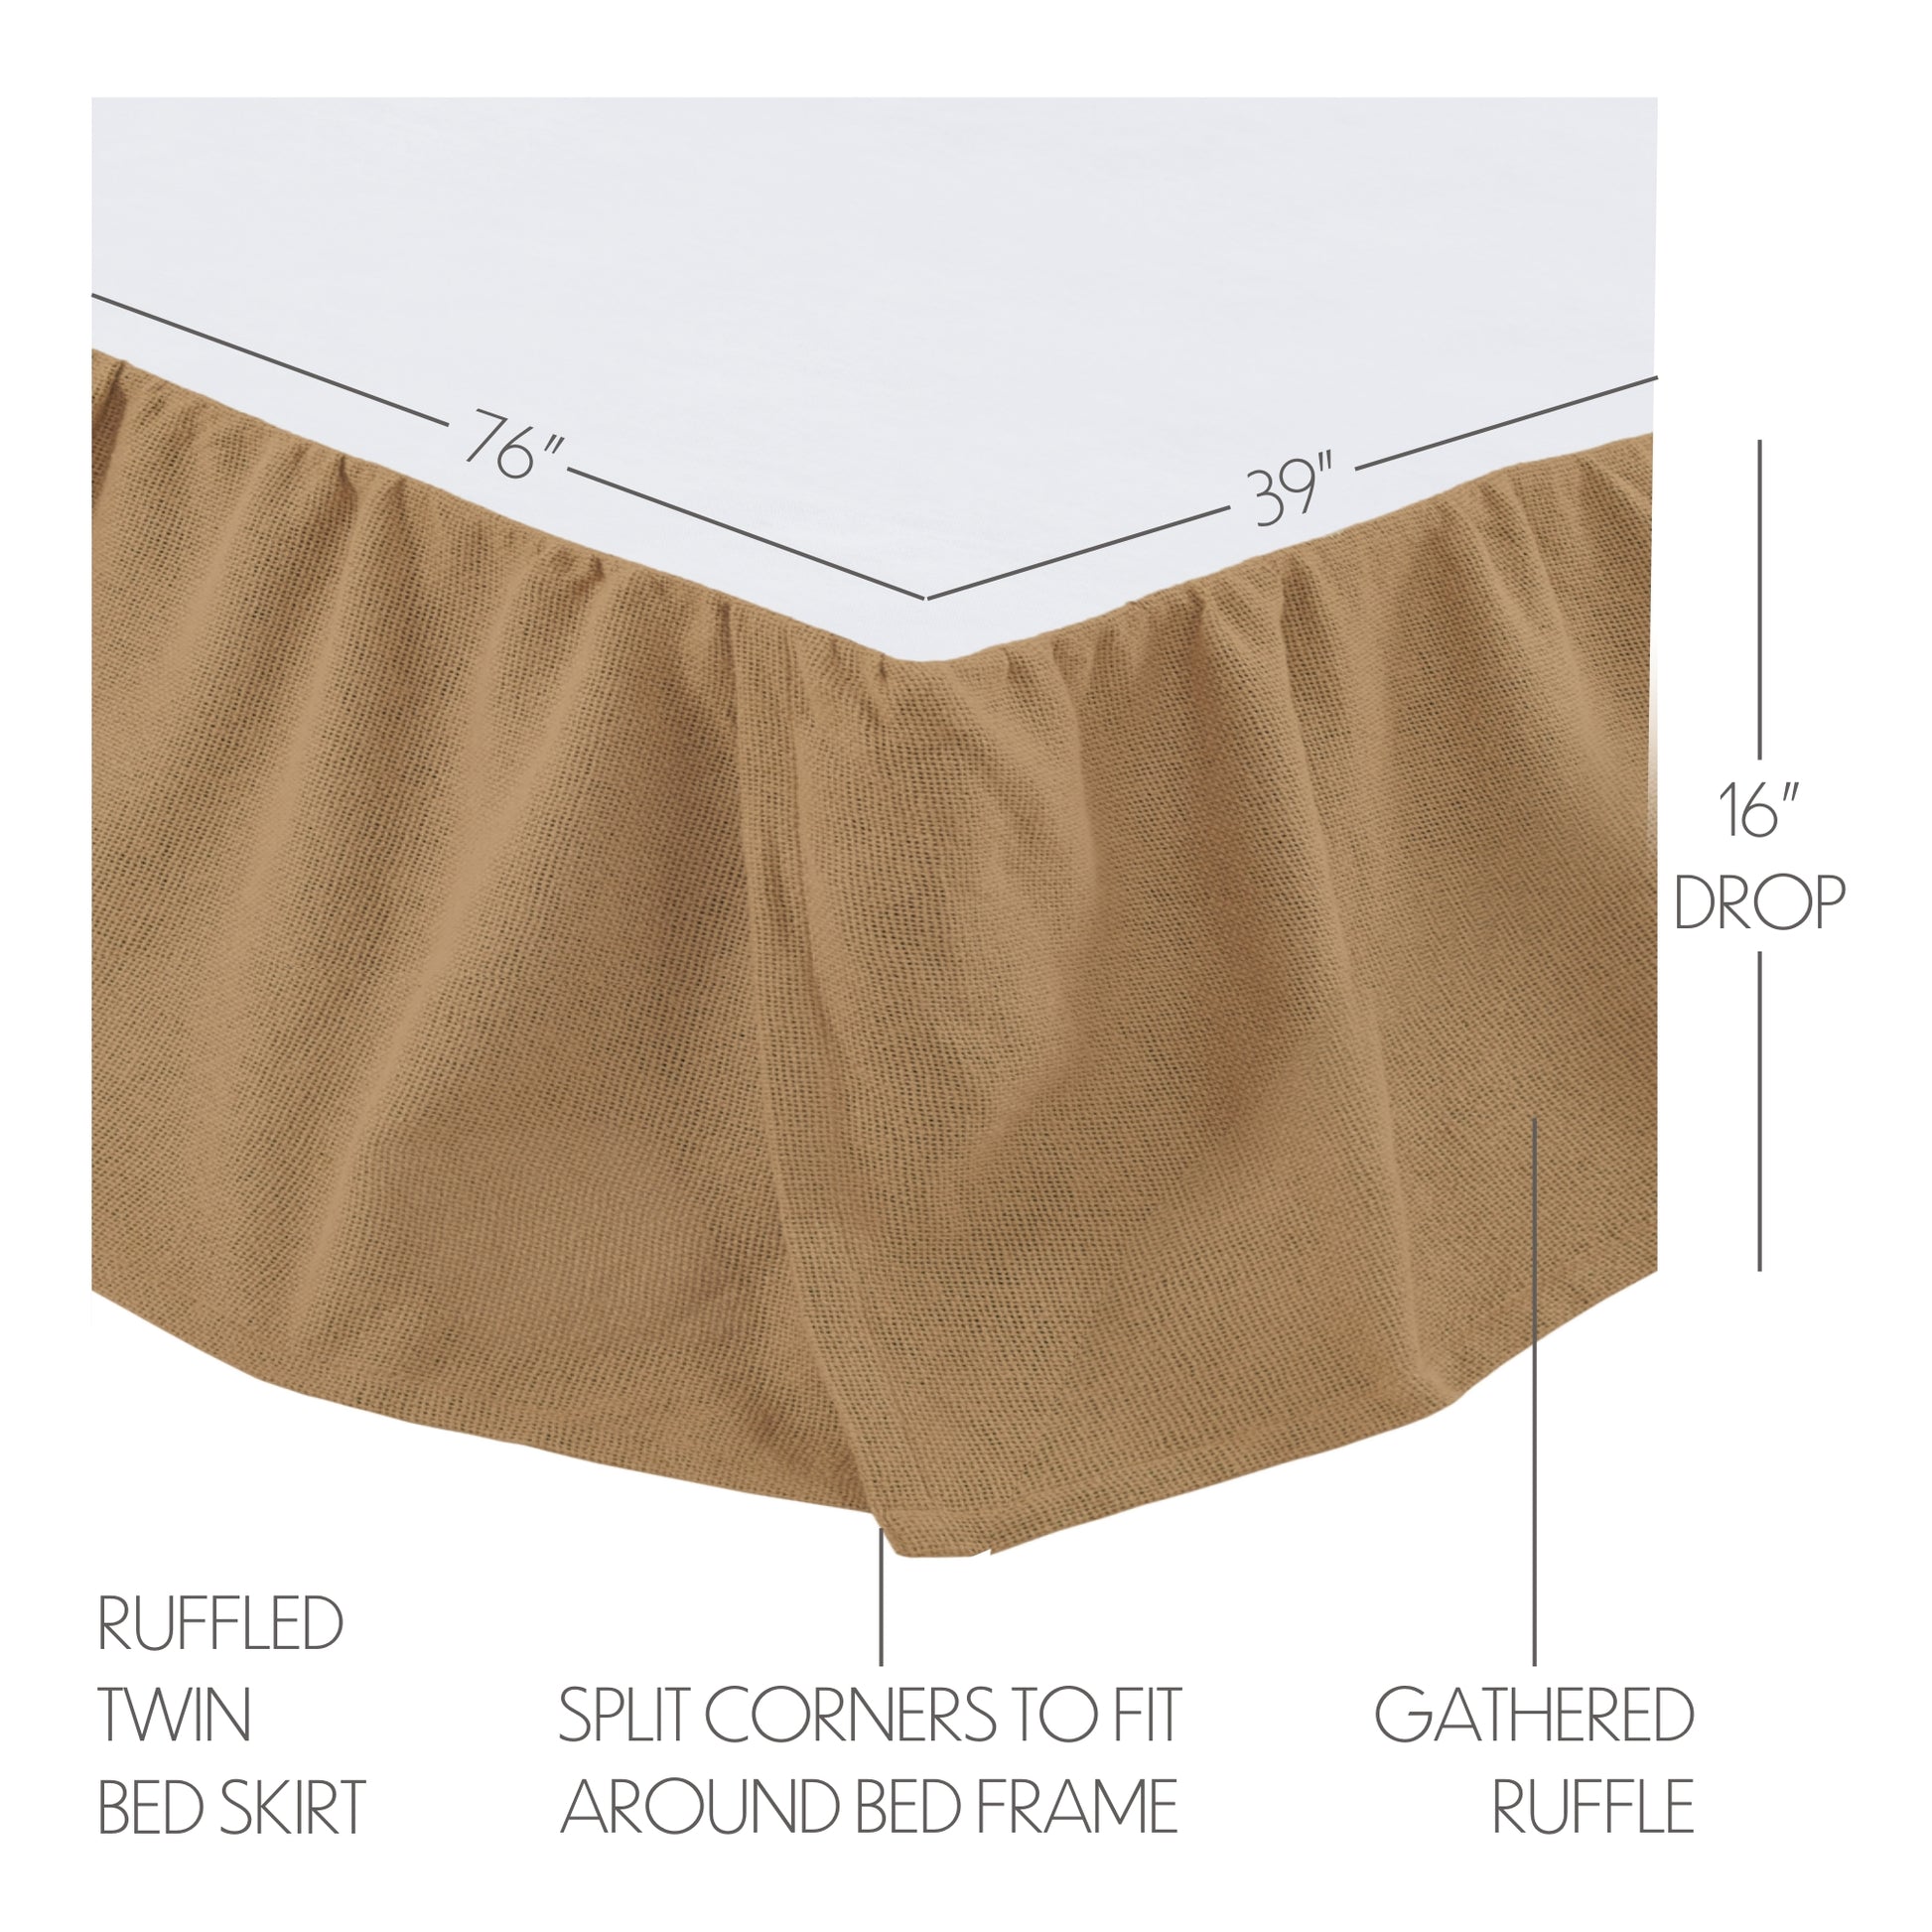 29600-Burlap-Natural-Ruffled-Twin-Bed-Skirt-39x76x16-image-2